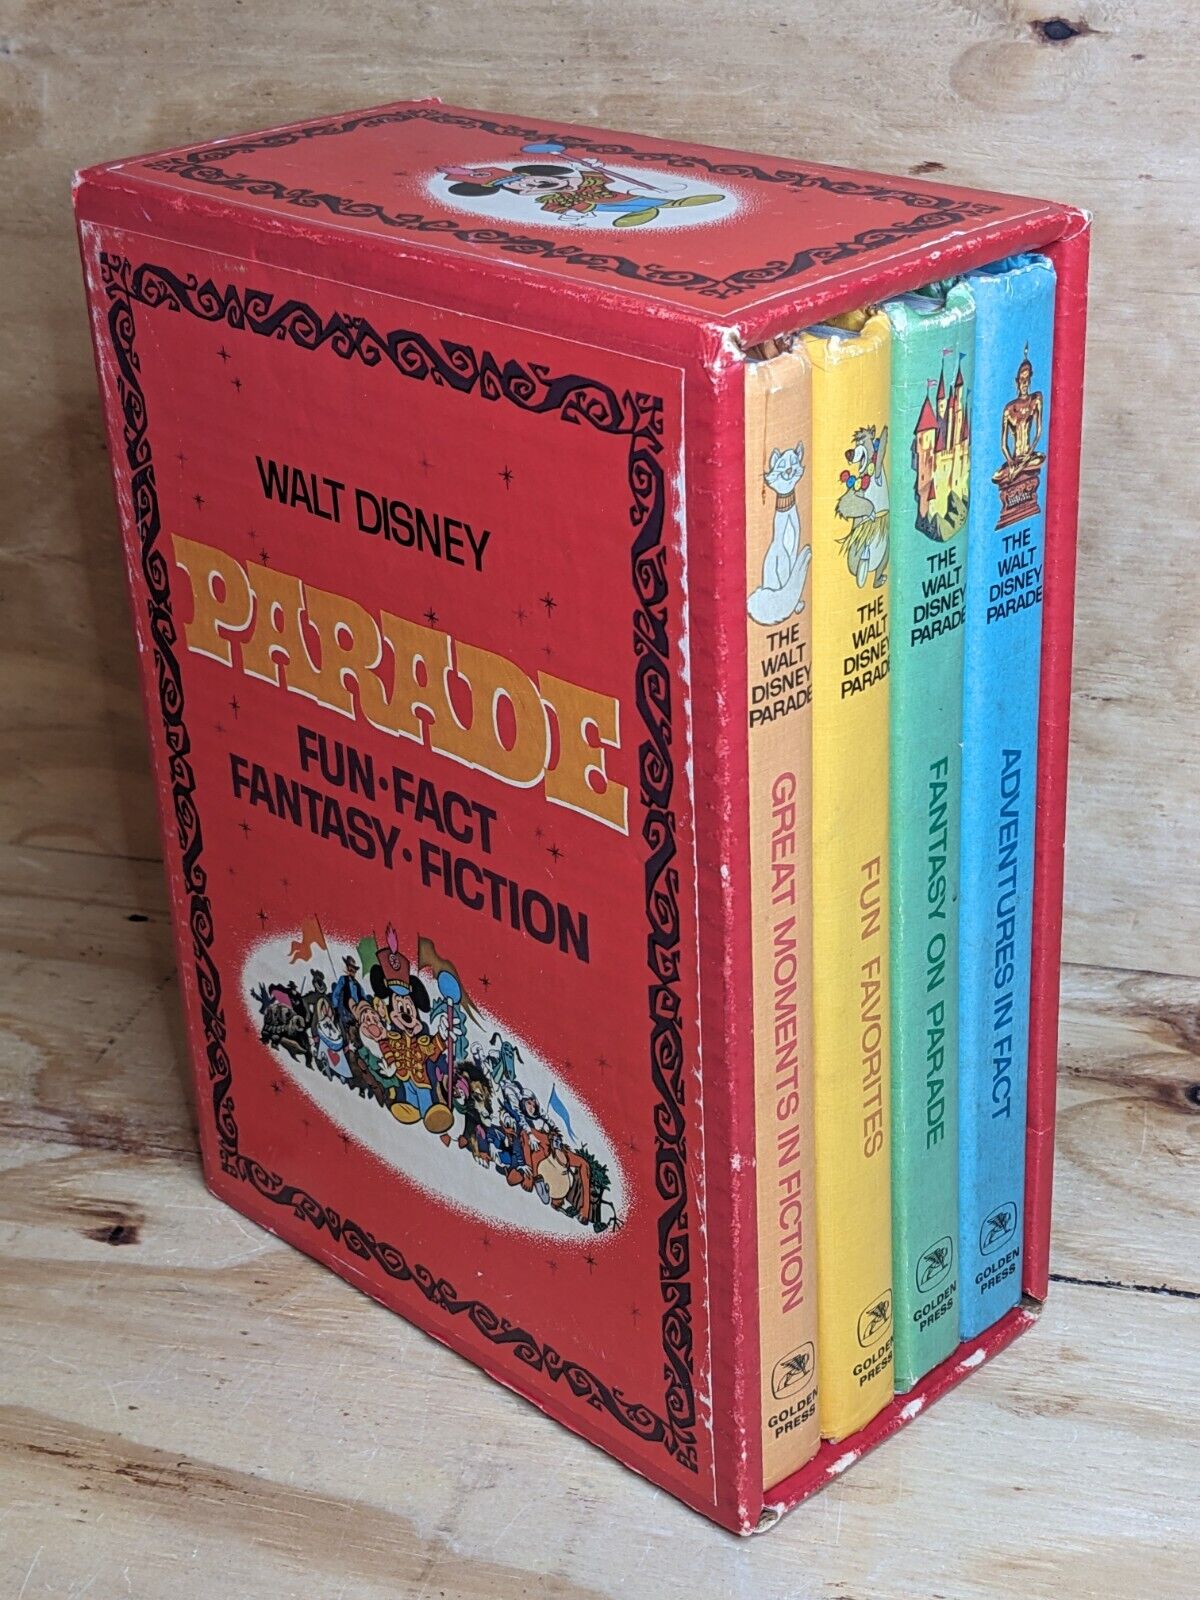 Rare Vintage The Walt Disney Parade Fun Fact Fantasy Fiction Book Set of 4 1970